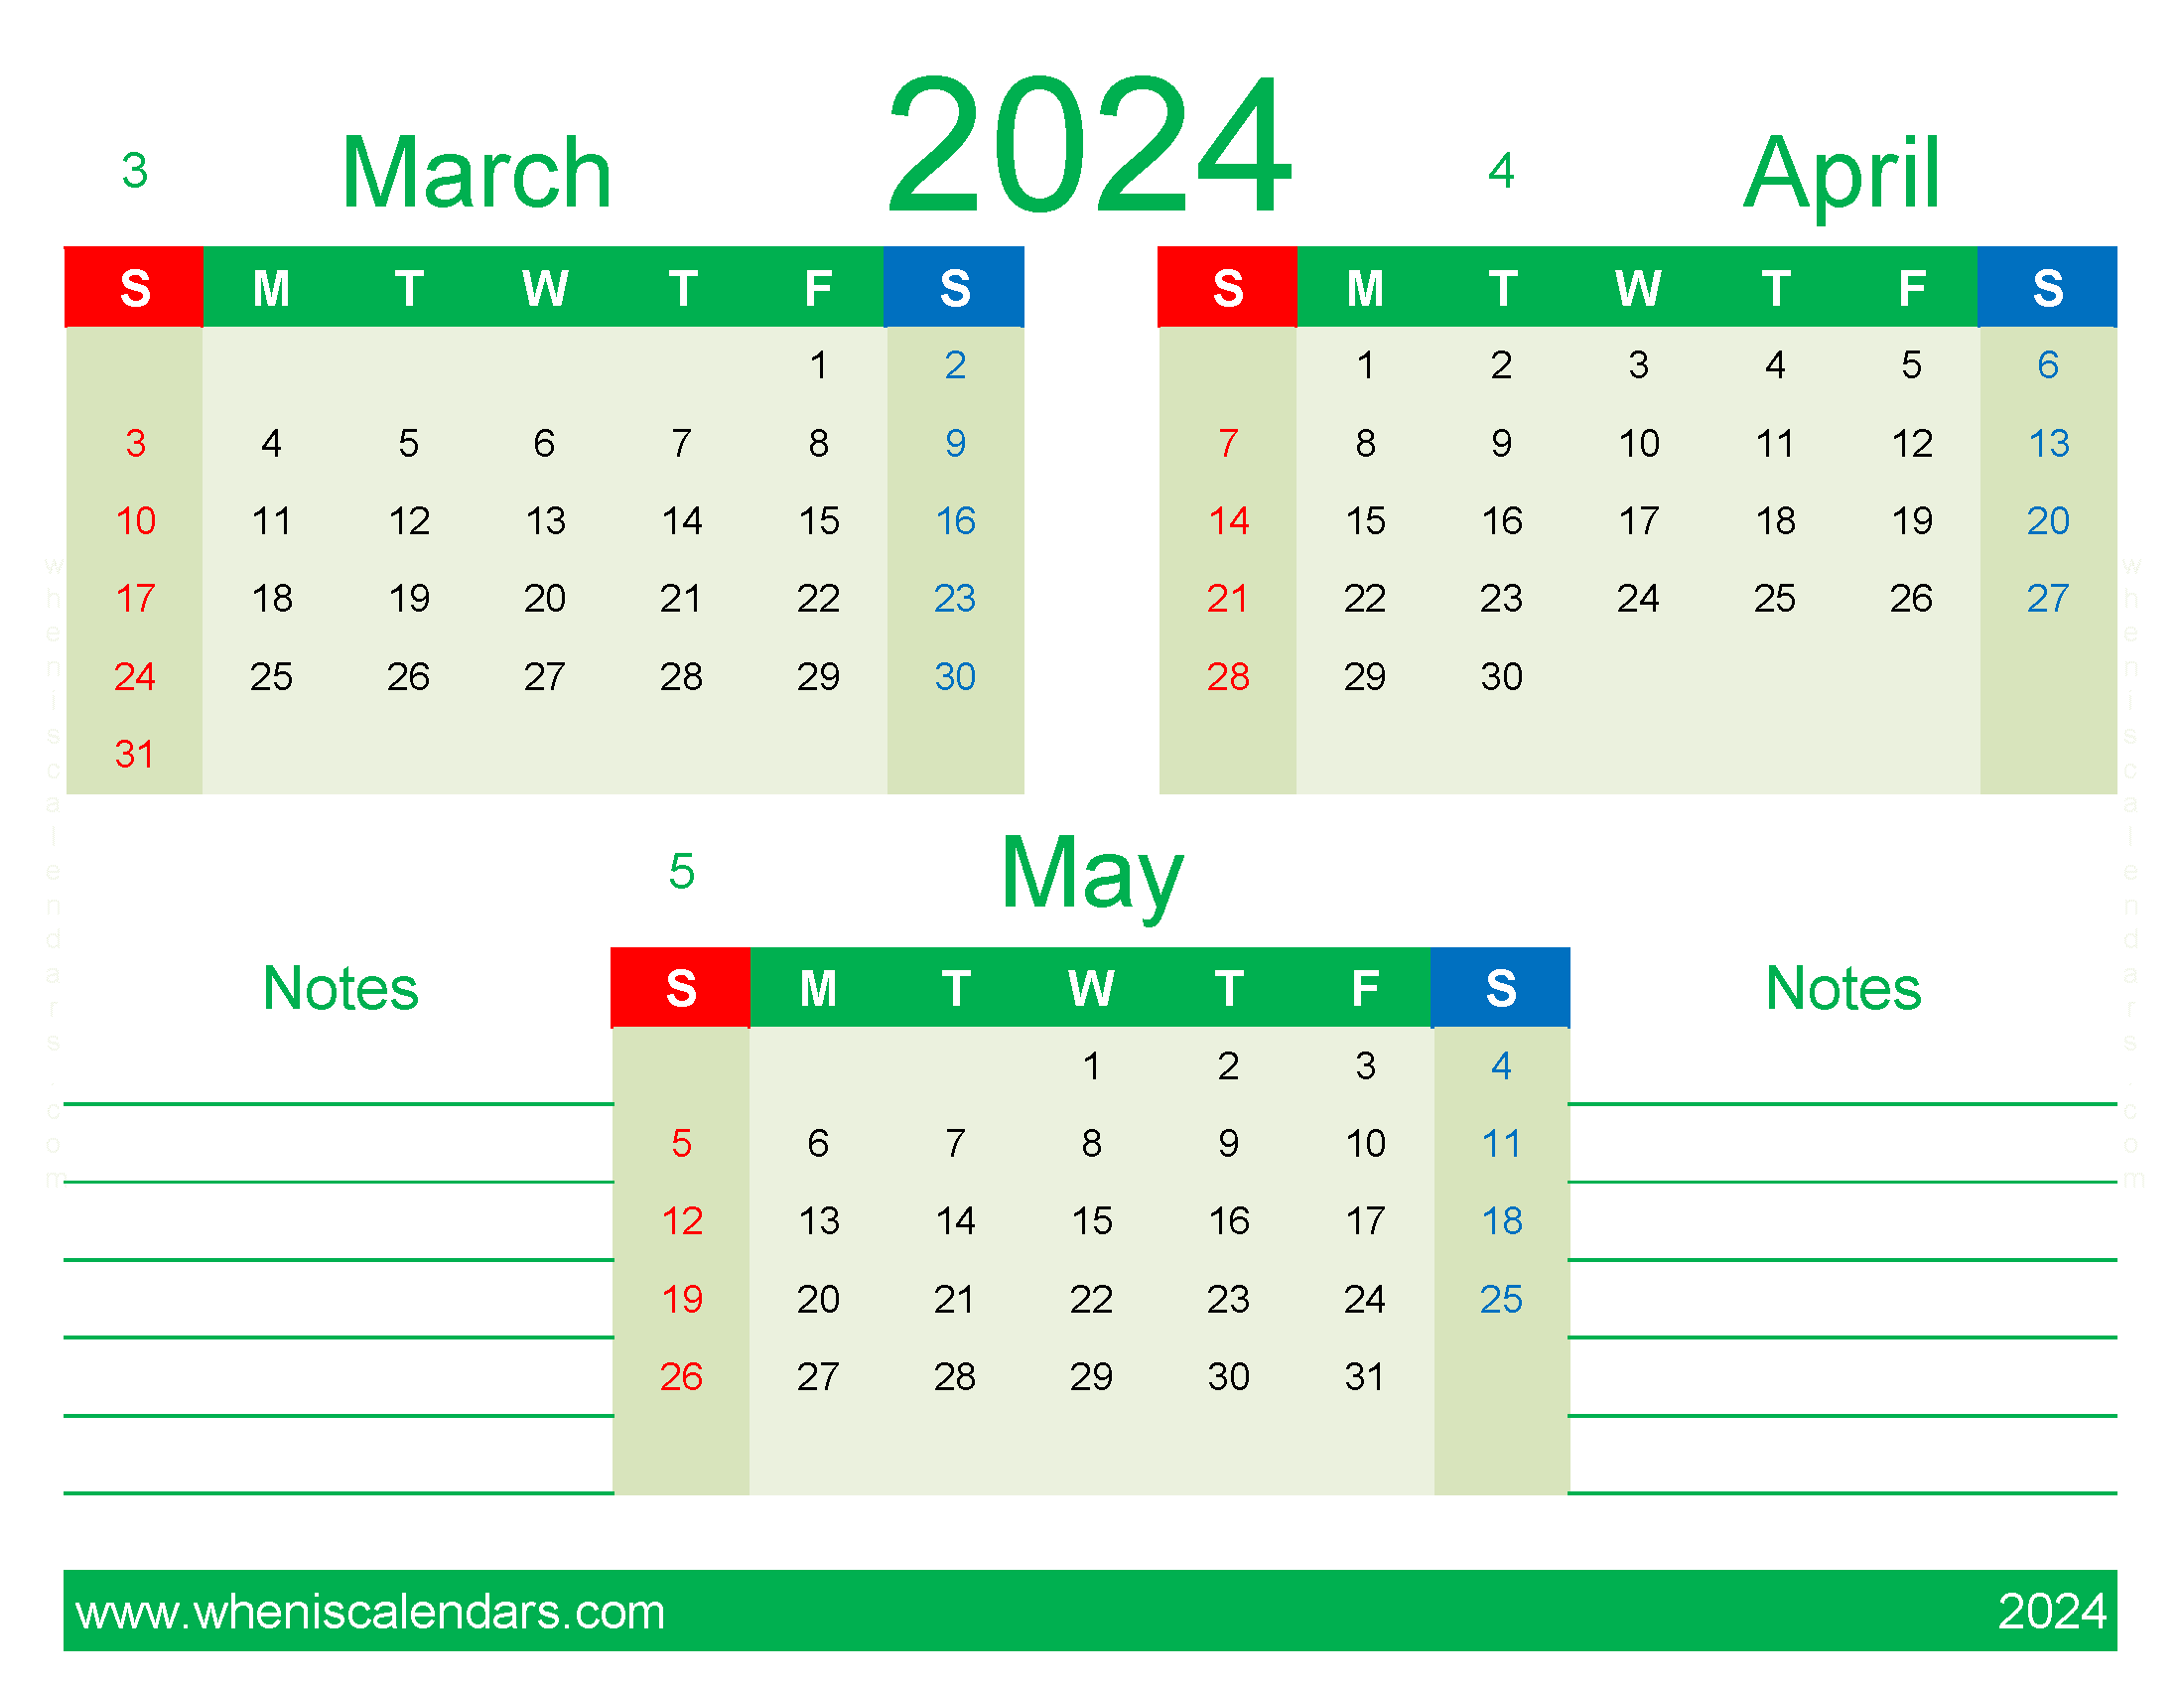 Download Mar Apr and May 2024 calendar MAM432